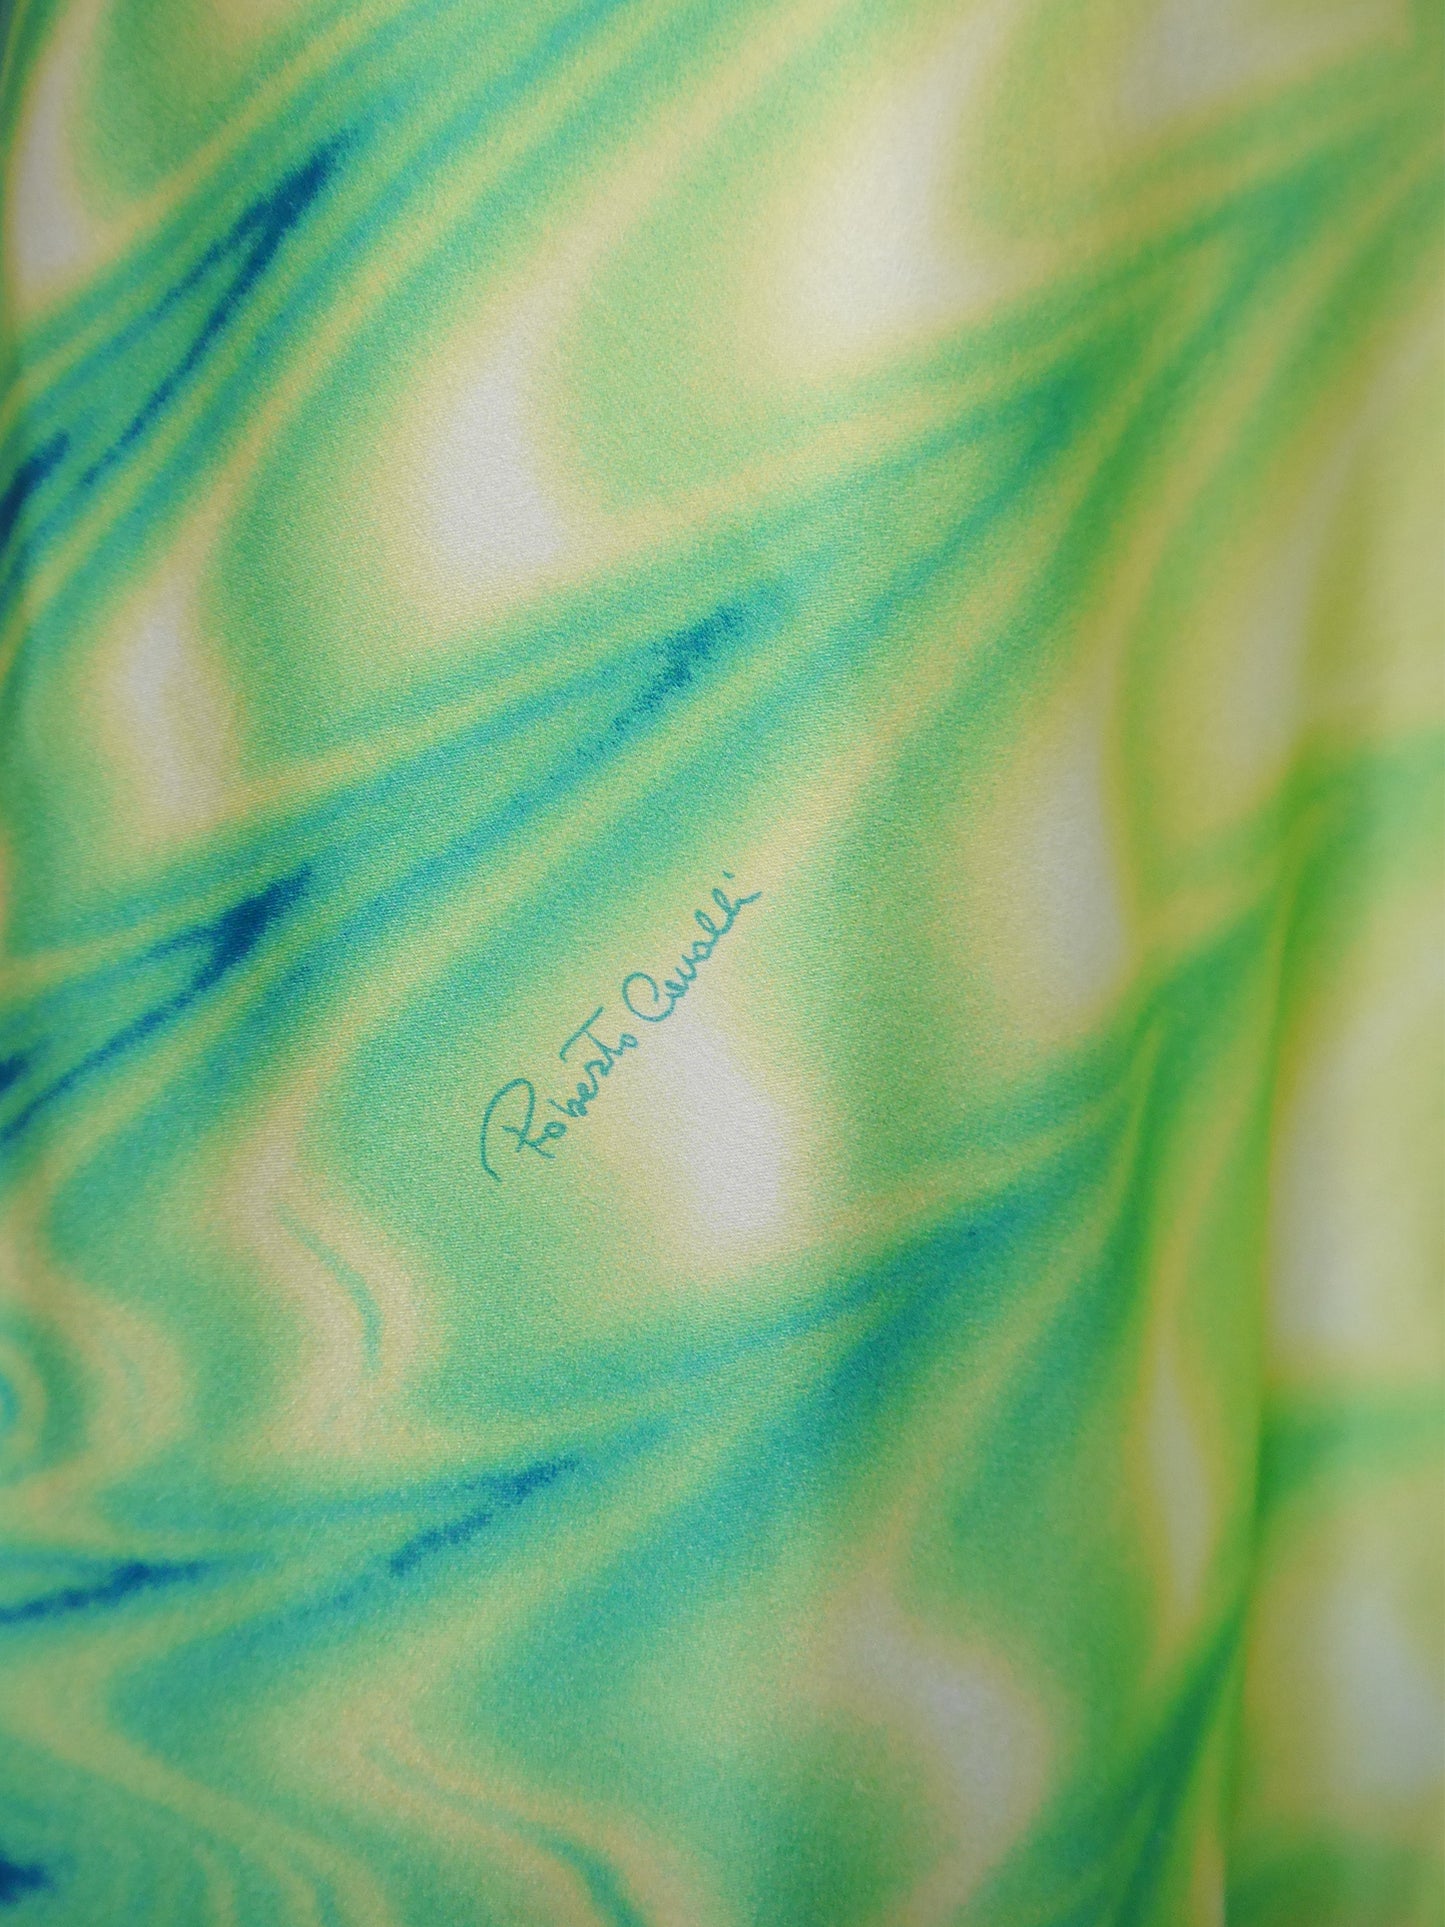 ROBERTO CAVALLI Spring 2001 Vintage Psychedelic Print Silk Skirt Size S